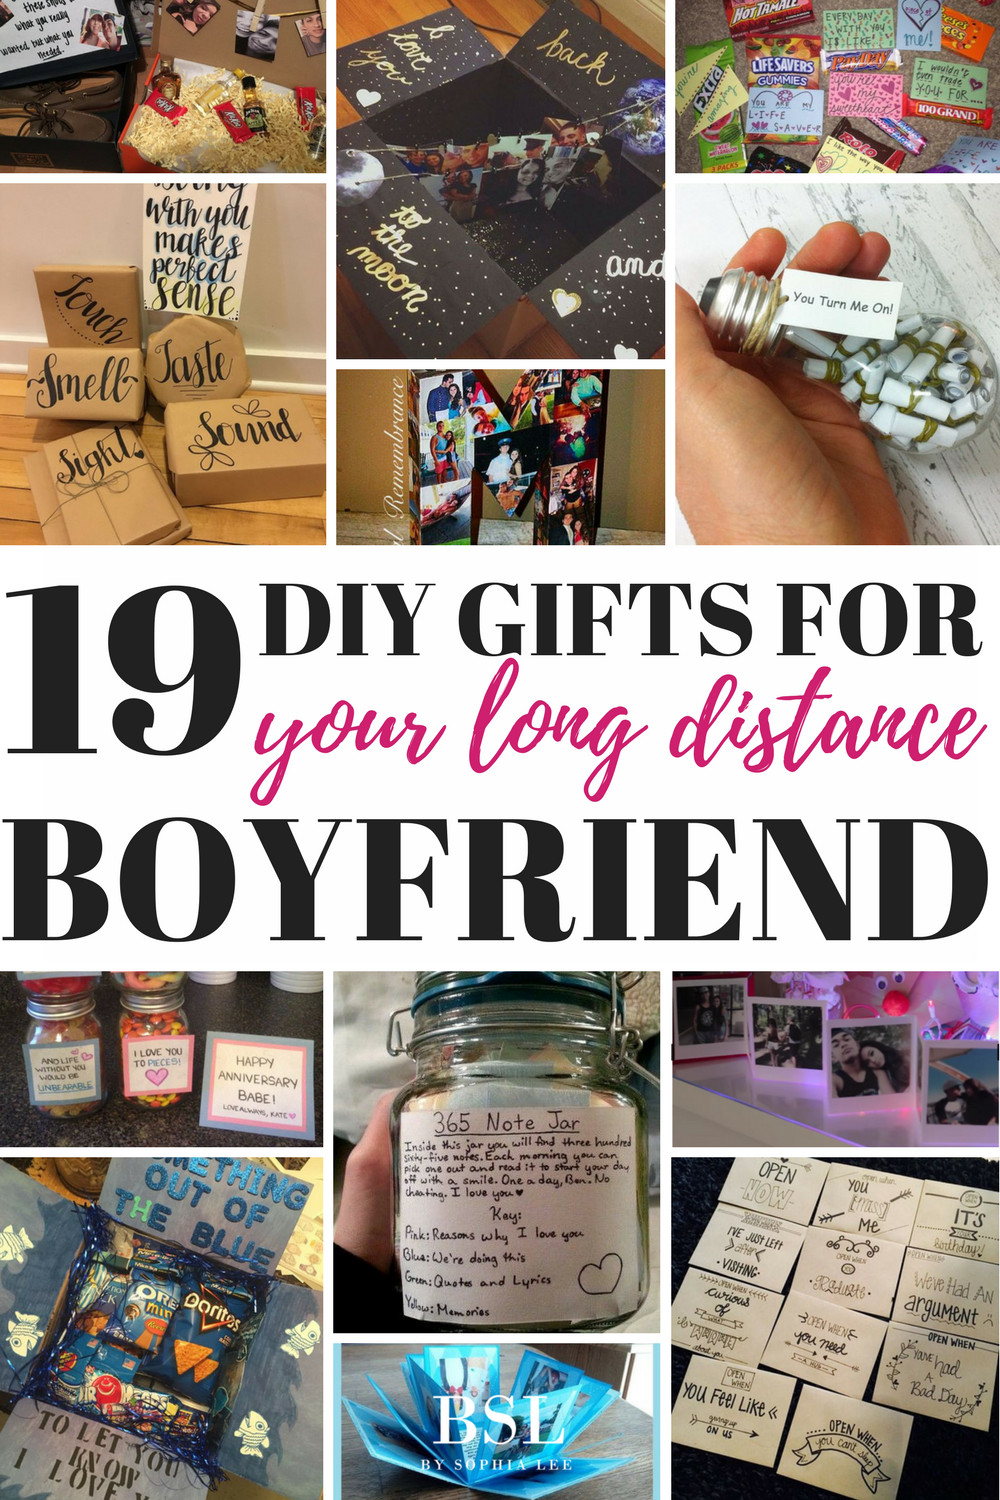 Gift Ideas For Long Distance Girlfriend
 19 DIY Gifts For Long Distance Boyfriend That Show You